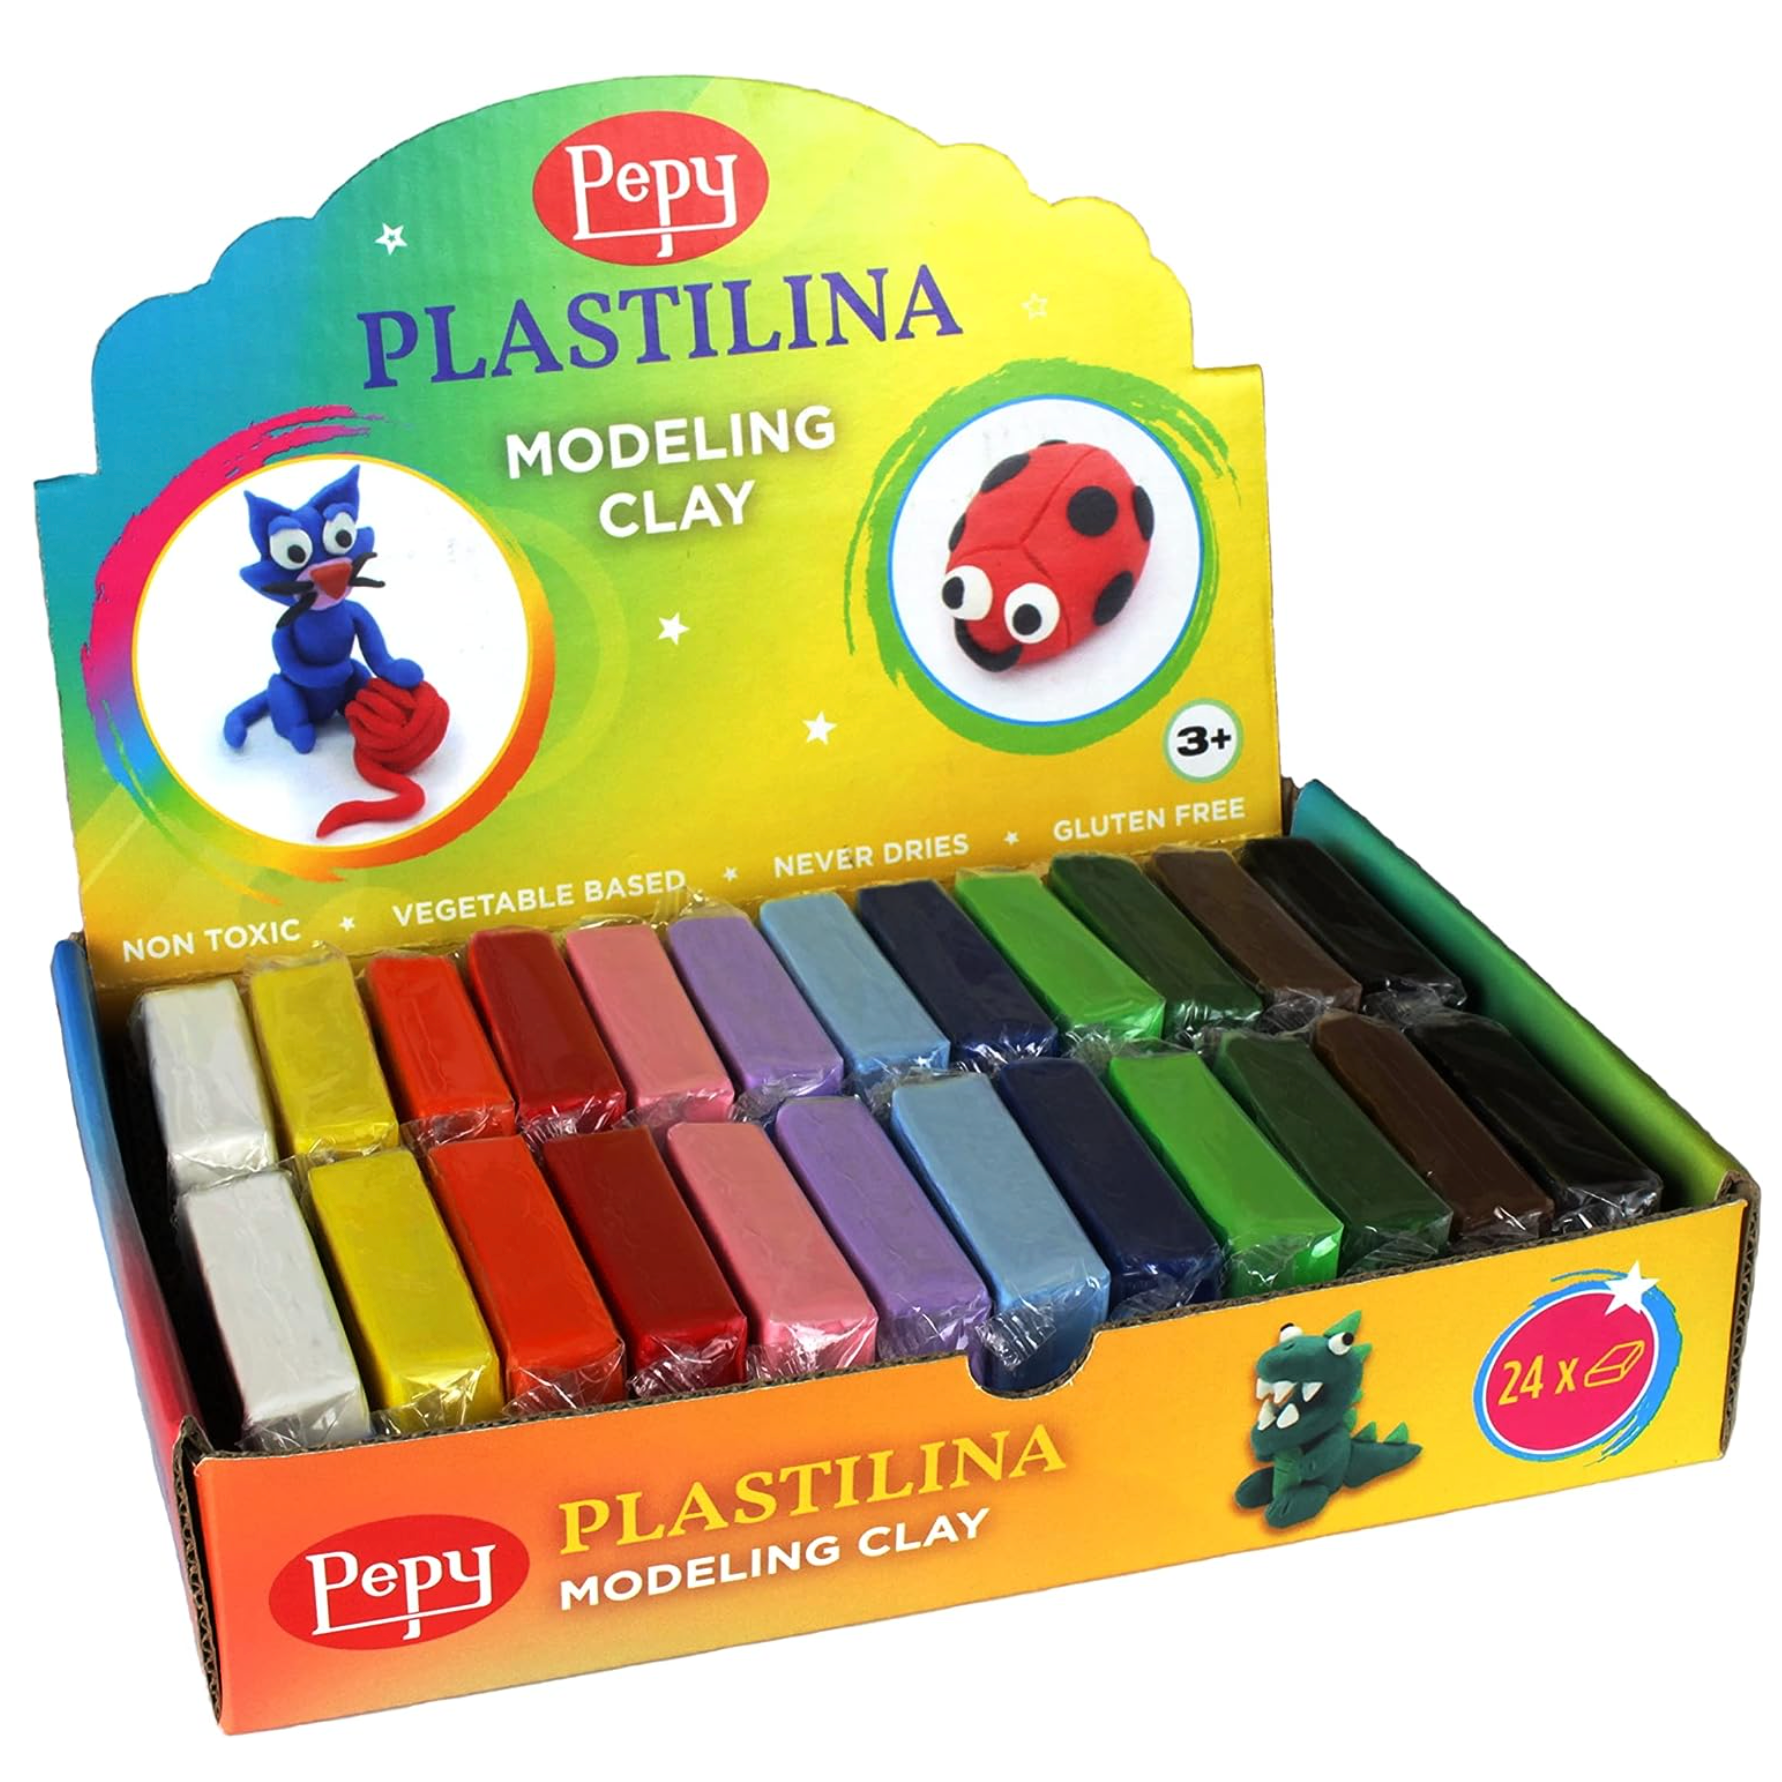 Pepy - Plastilina 24pc set